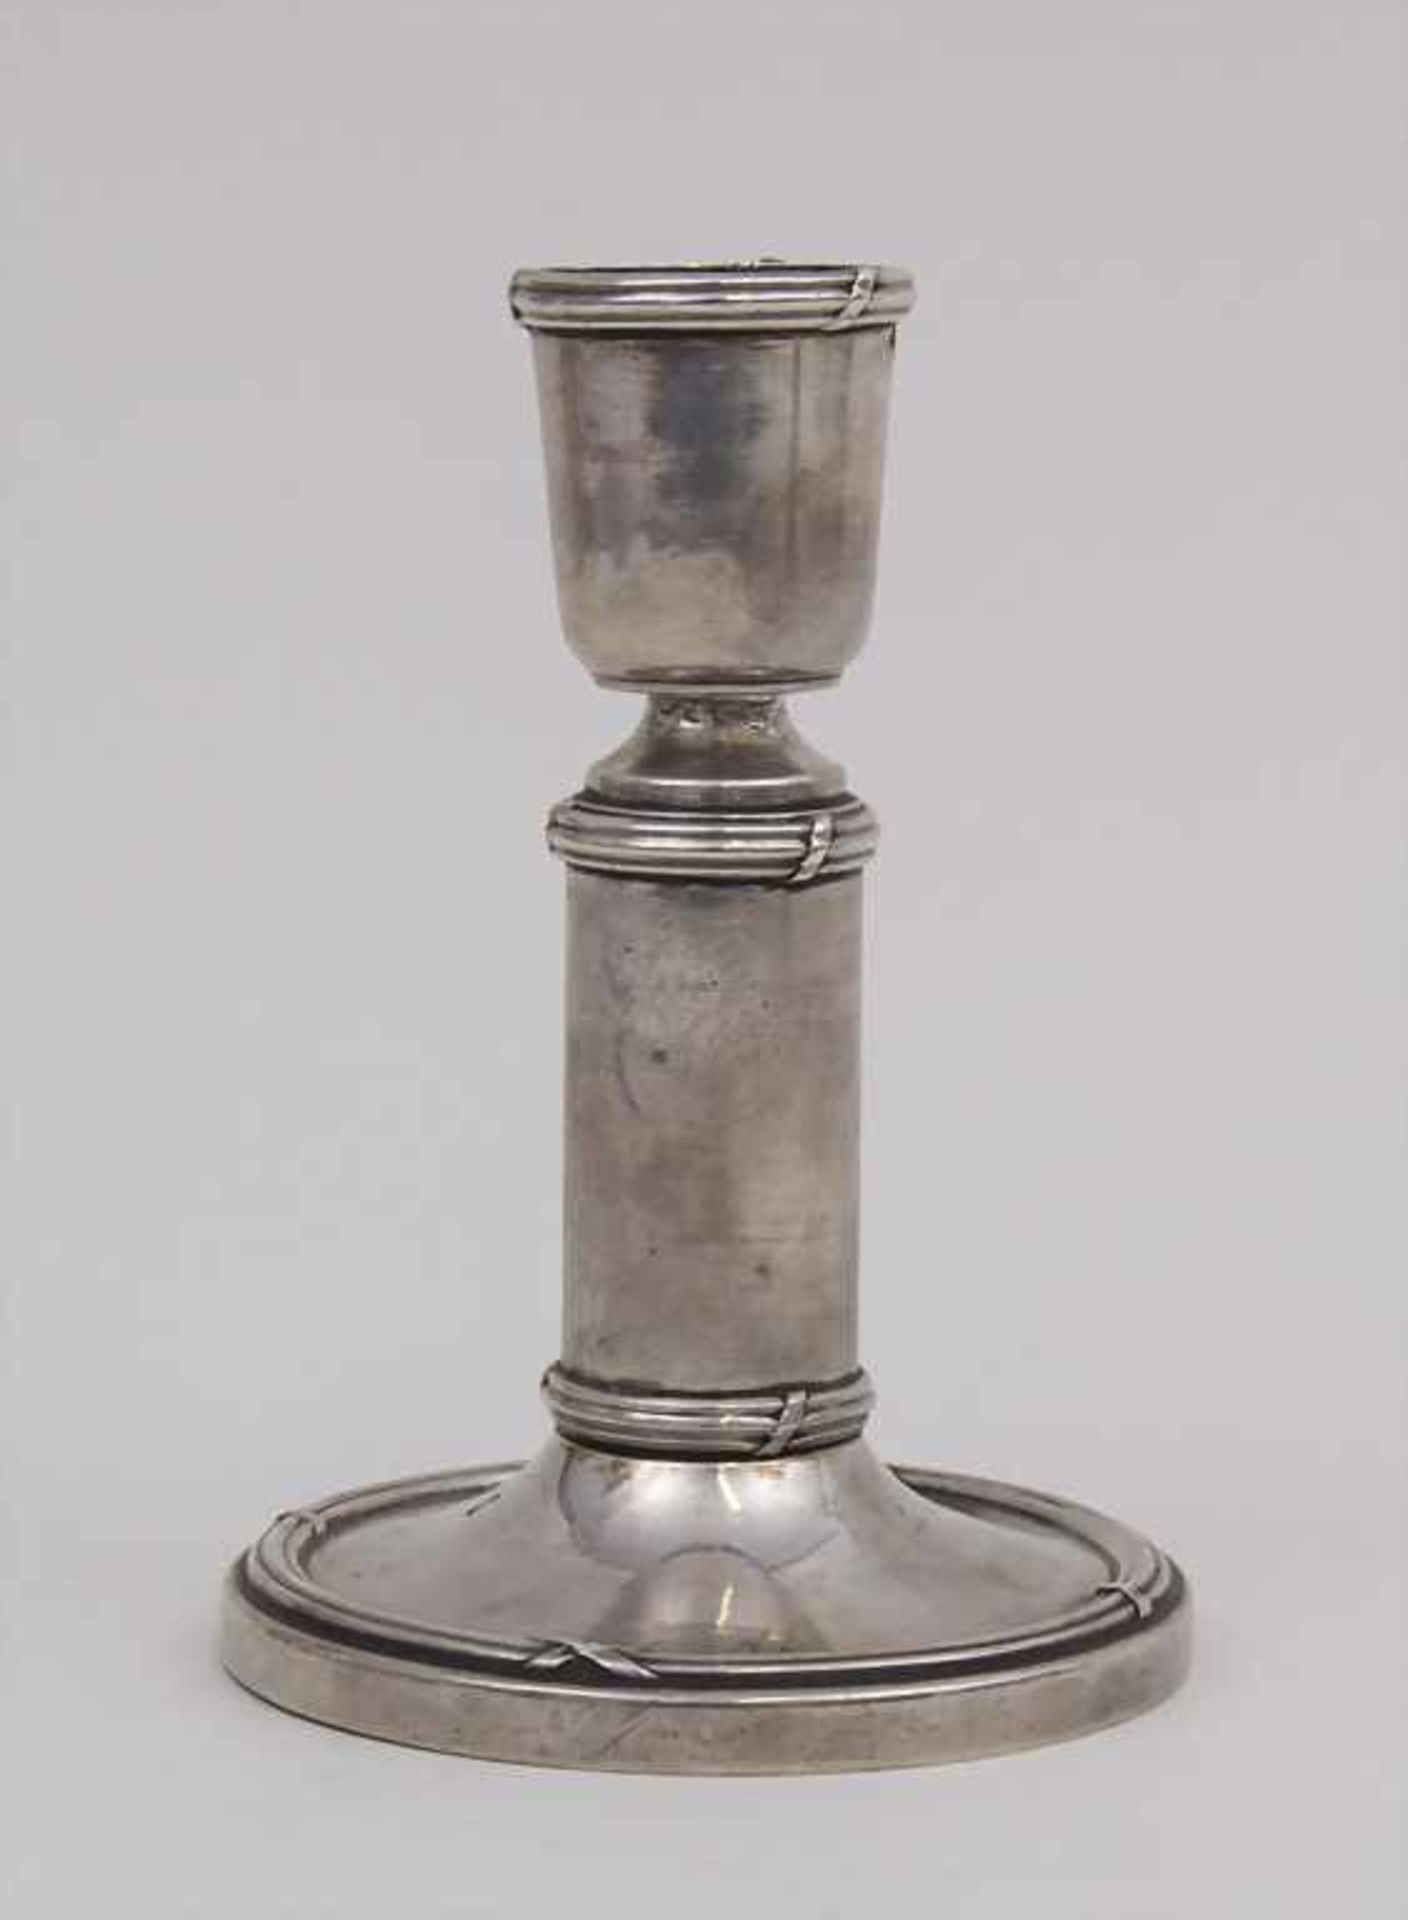 Tischleuchter / A candle holder, Paris, um 1870 Material: 950er Silber, Punzierung: Minerva Kopf,